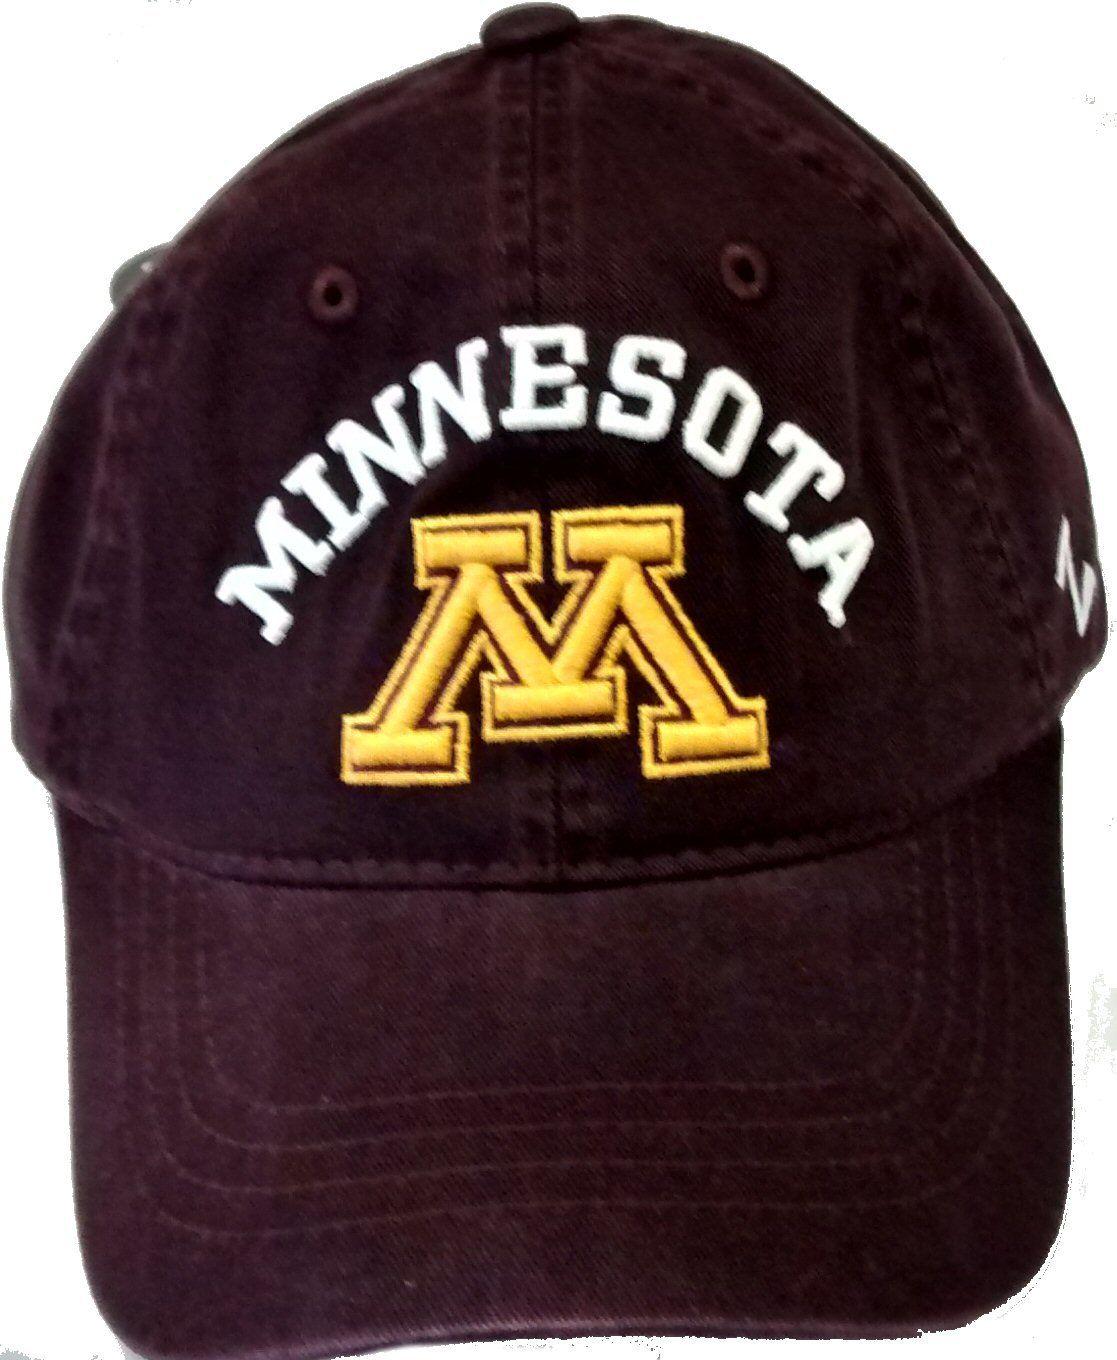 Minnesota M Logo - Amazon.com : Men's Centerpiece 